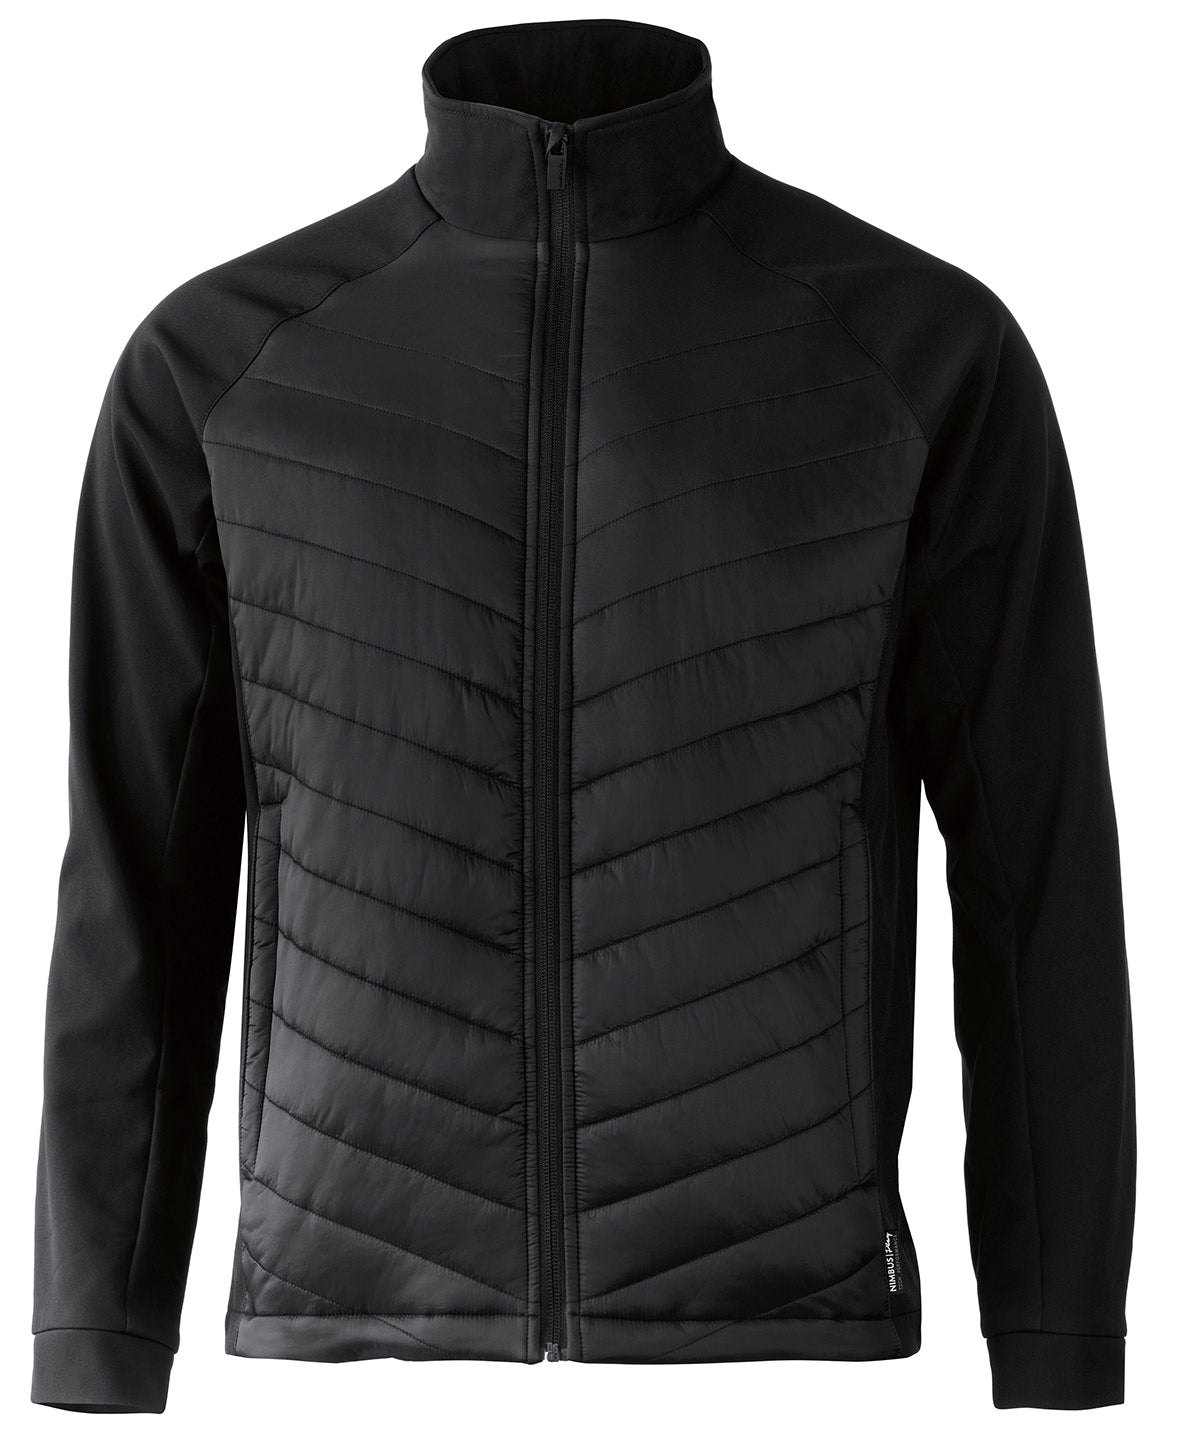 Nimbus Play Bloomsdale – comfortable hybrid jacket